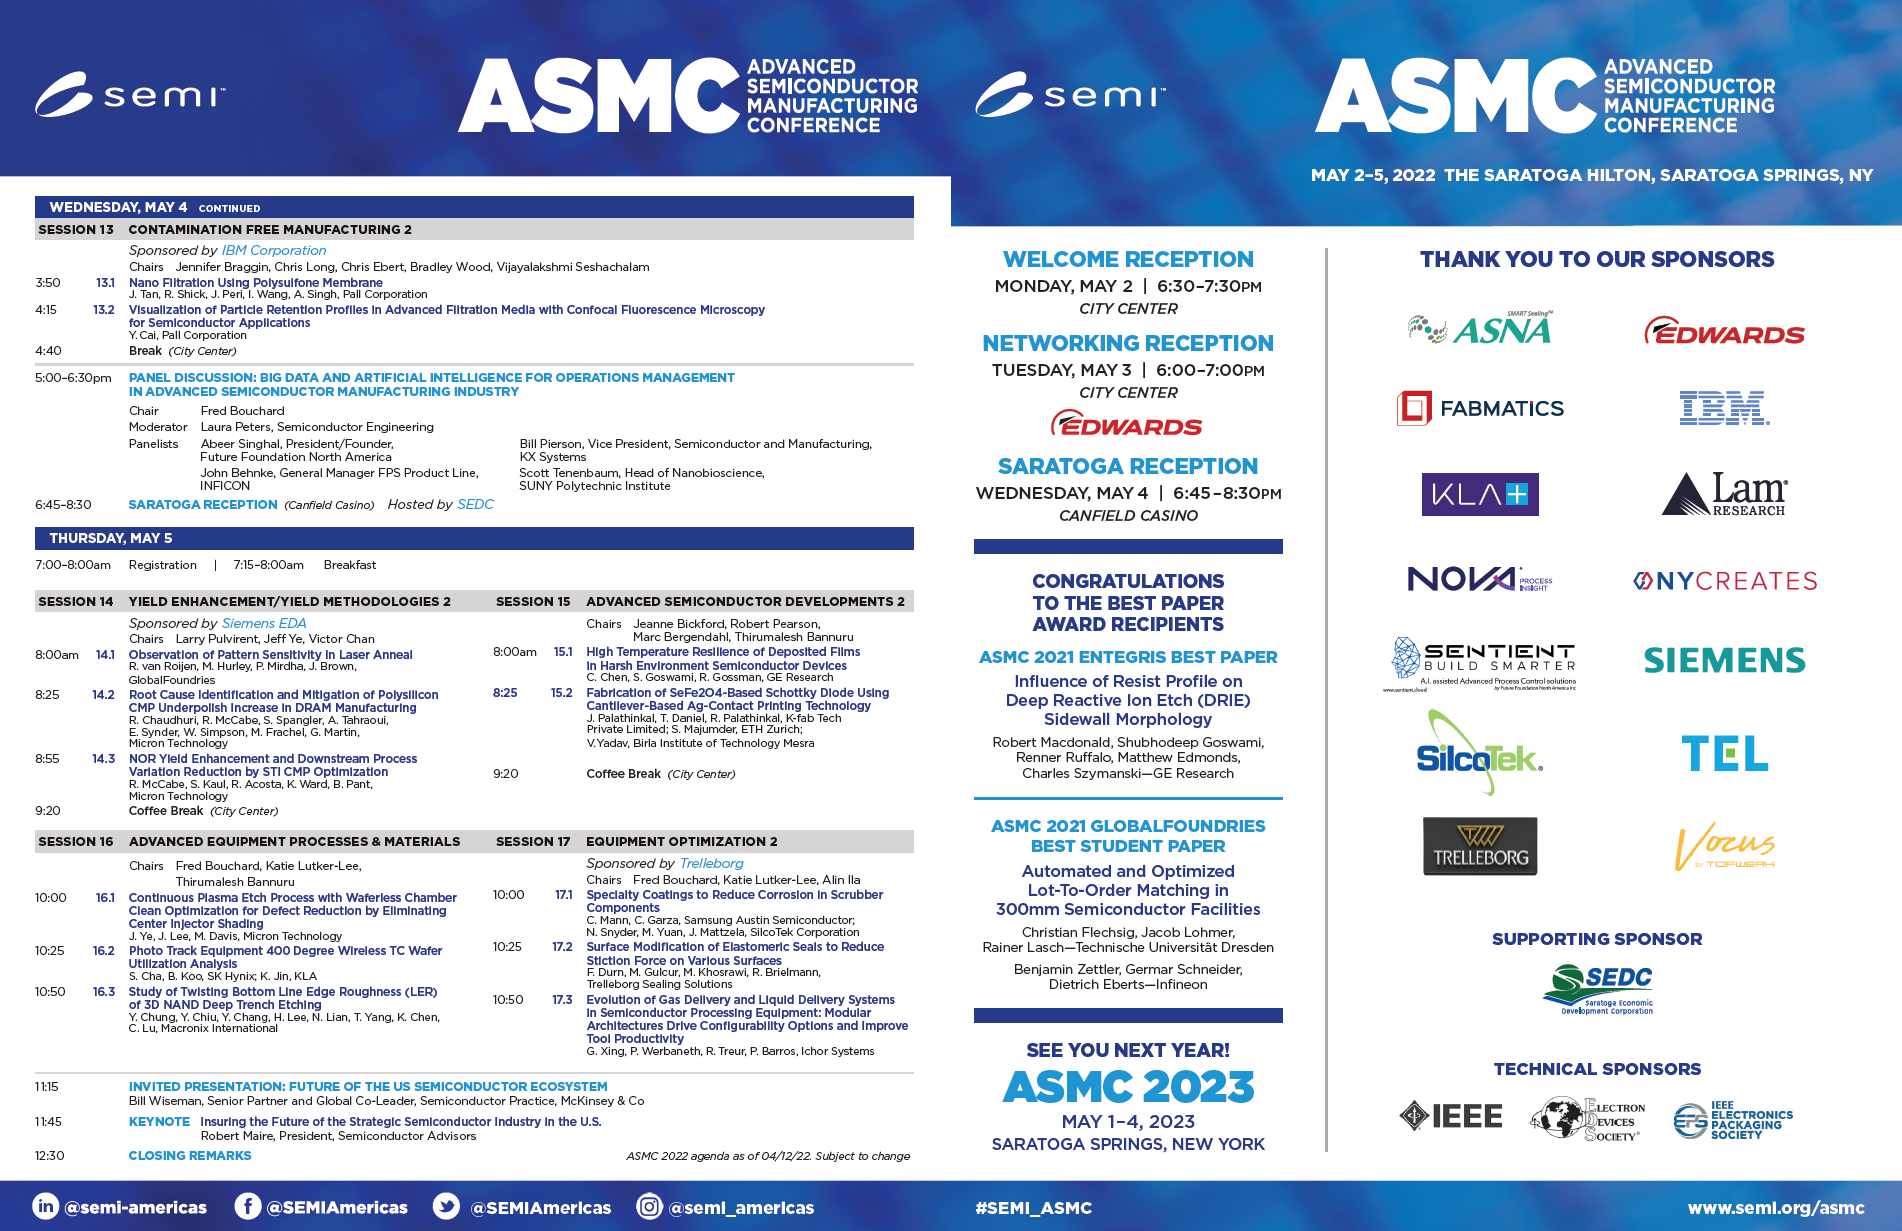 ASMC 2022 Event Guide Photo Cover